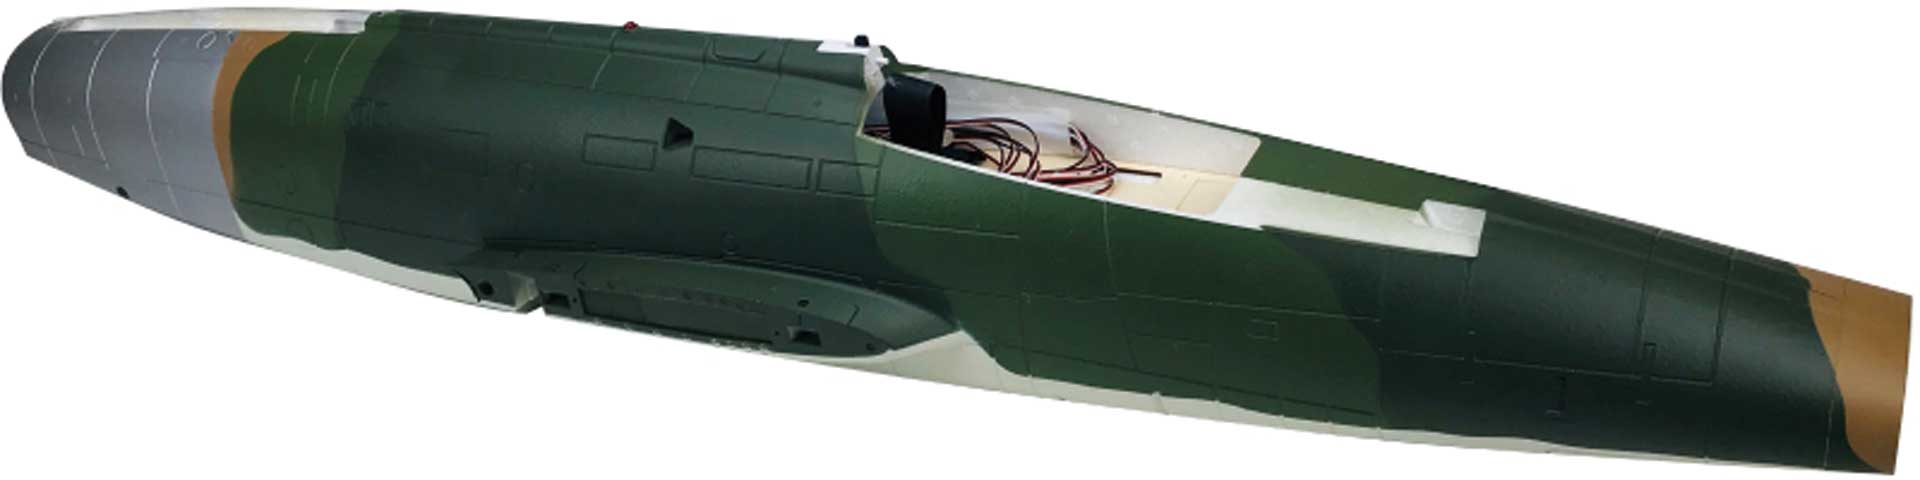 PREMIER AIRCRAFT RUMPF OHNE DECKEL GRÜN F-100D